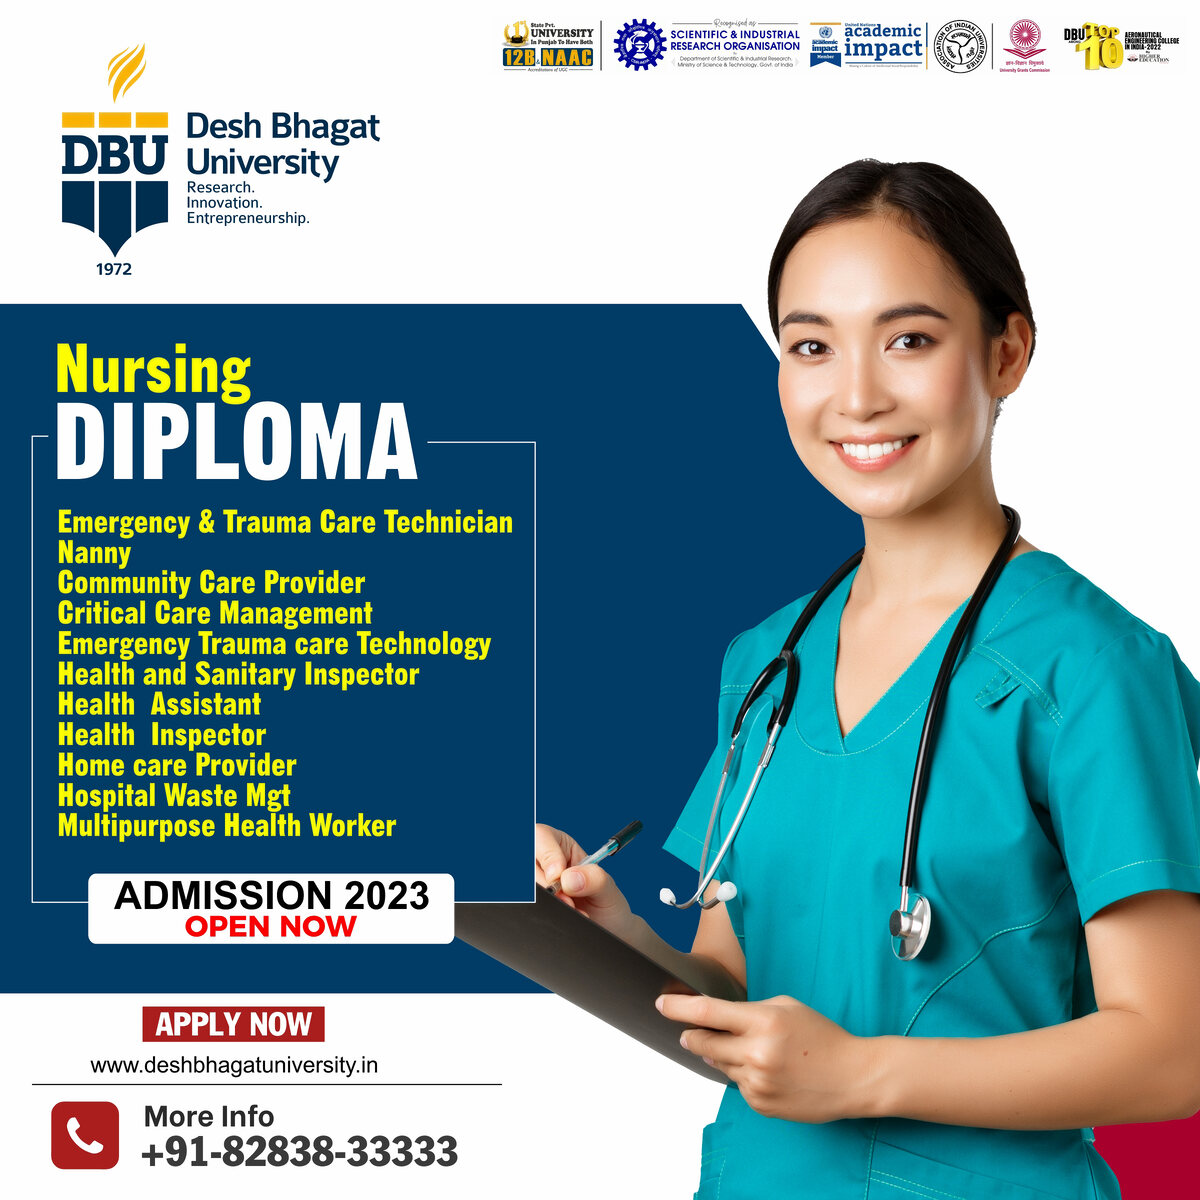 Faculty of Nursing DIPLOMA